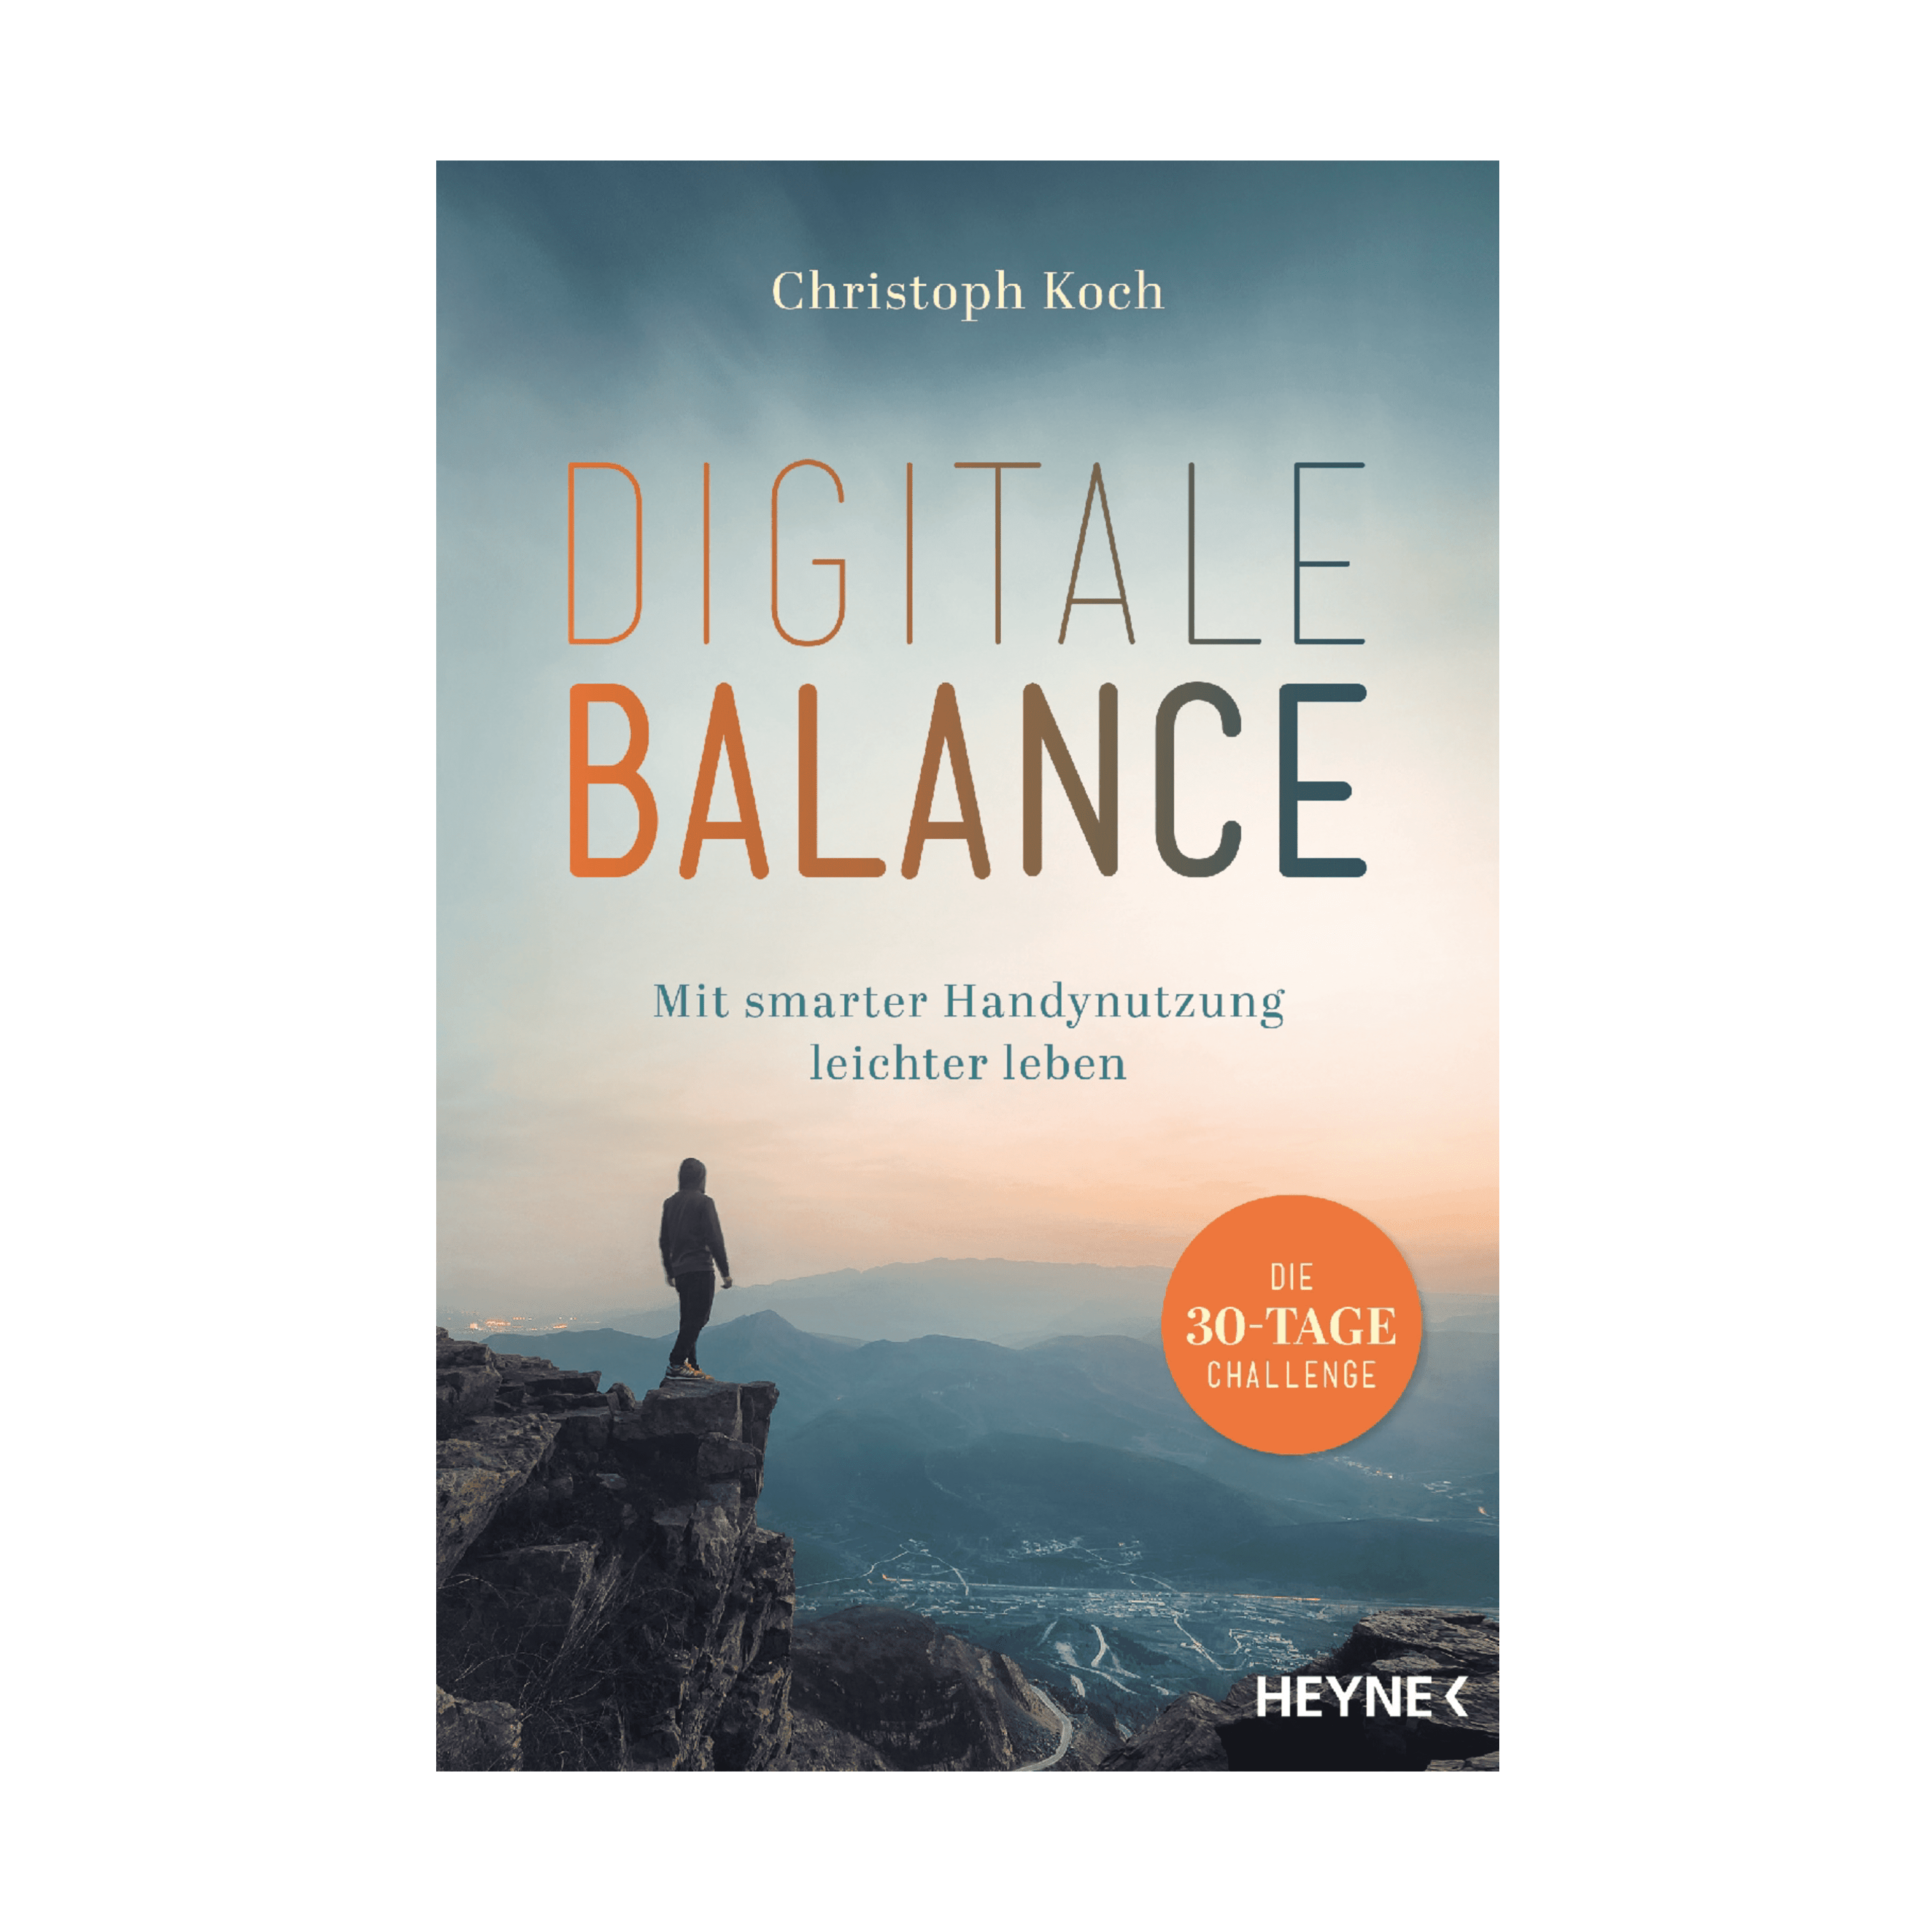 Book called Digital Balance